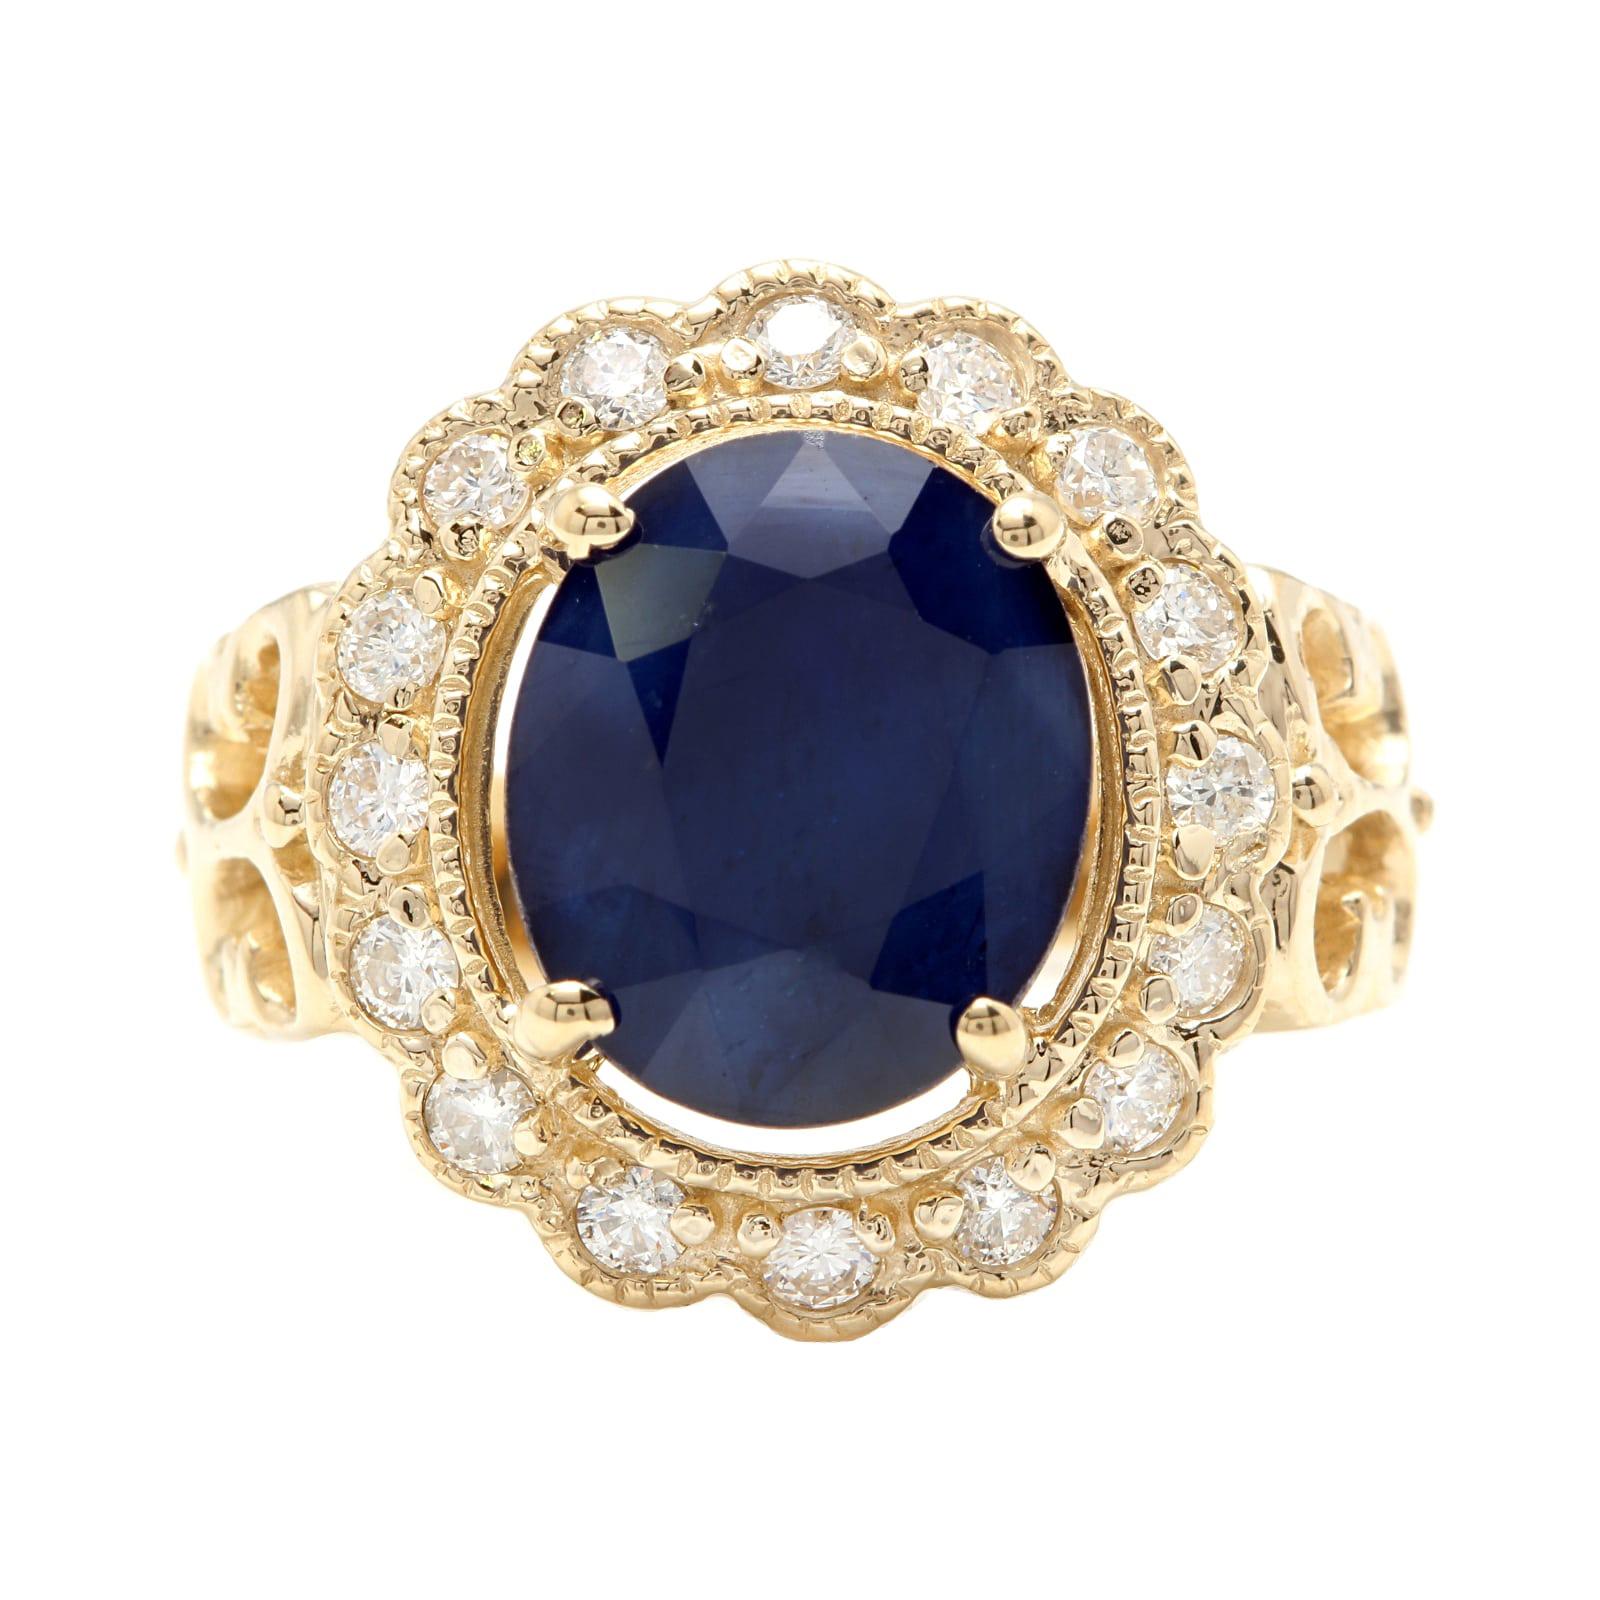 Bague en or jaune massif 14 carats avec saphir bleu naturel de 7,50 carats et diamant